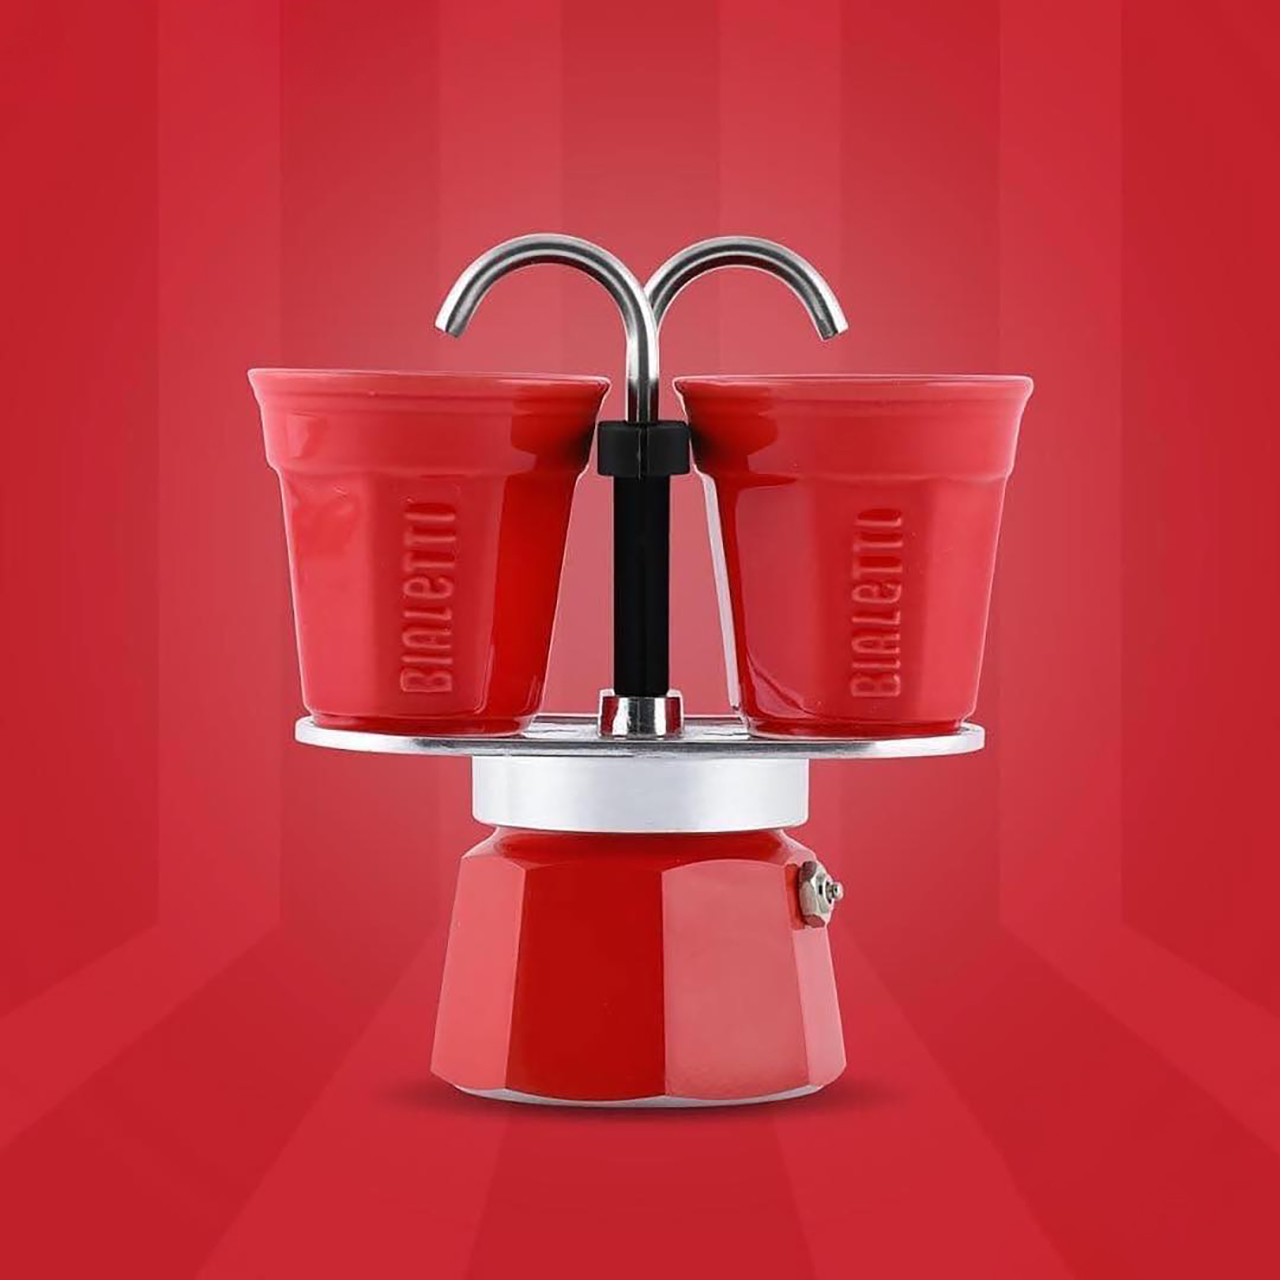 Mini Express Red Espresso Maker - 2 Cups